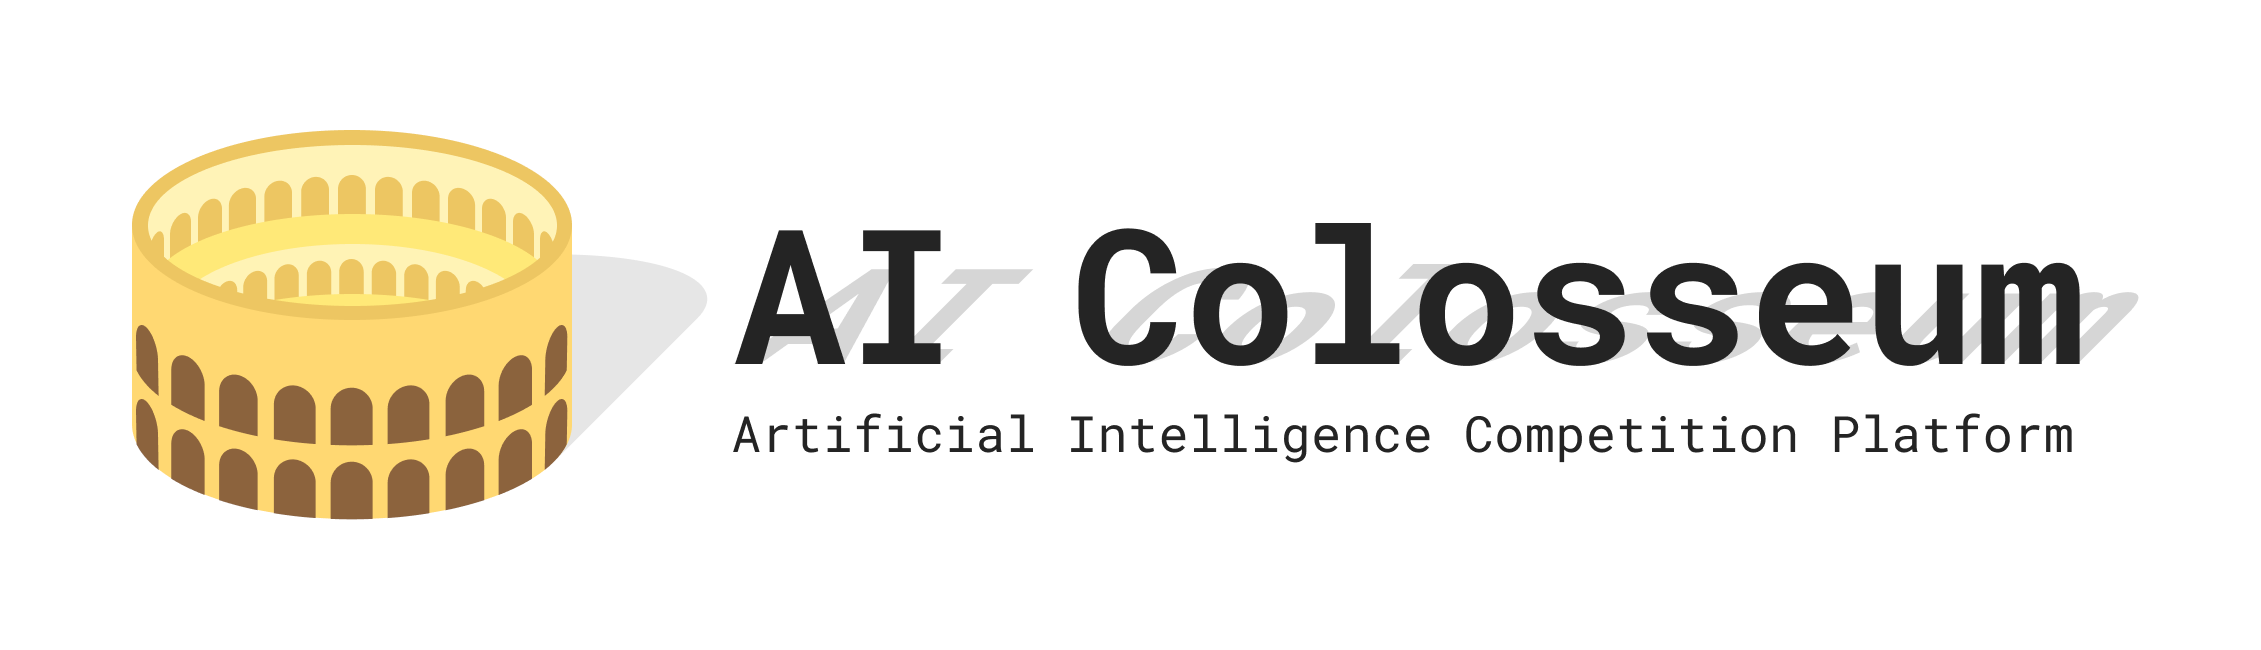 AI Colloseum Banner